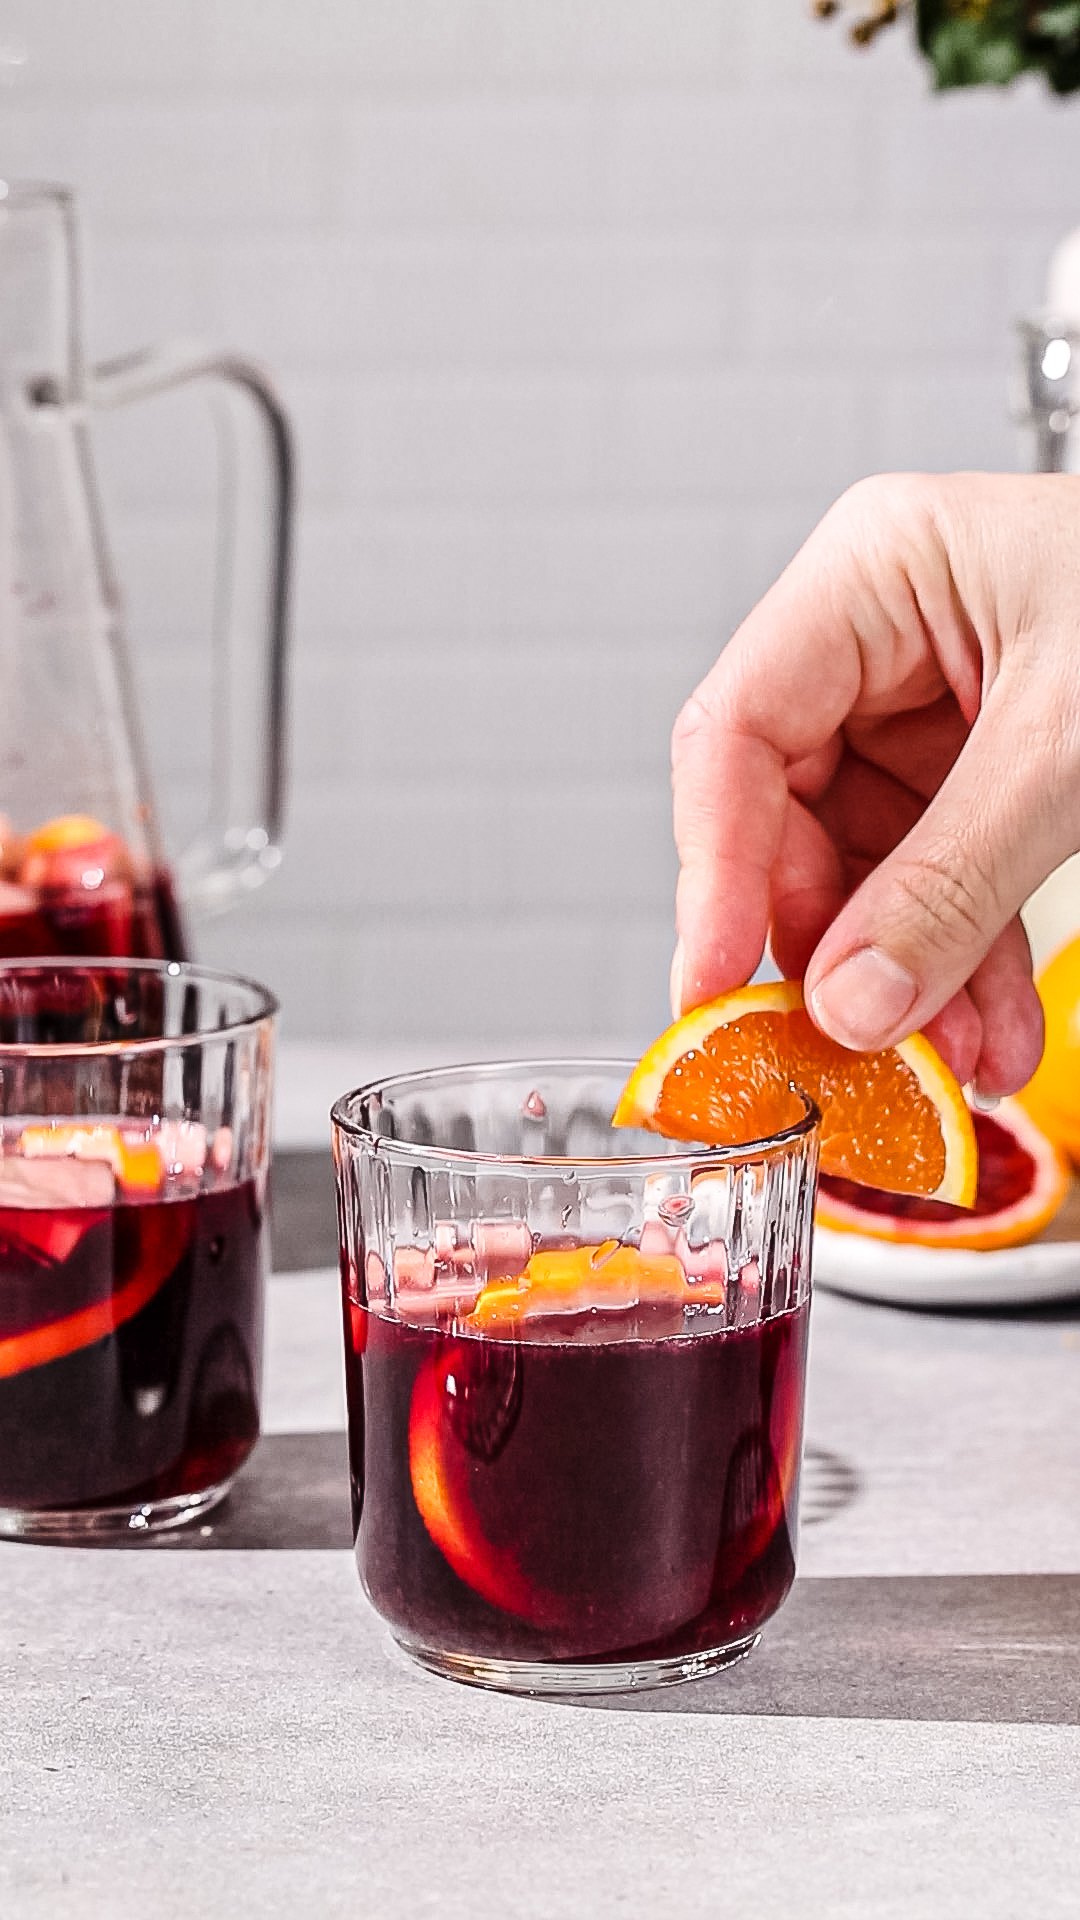 Hand adding a slice of orange to the rim of a glass of sangria.